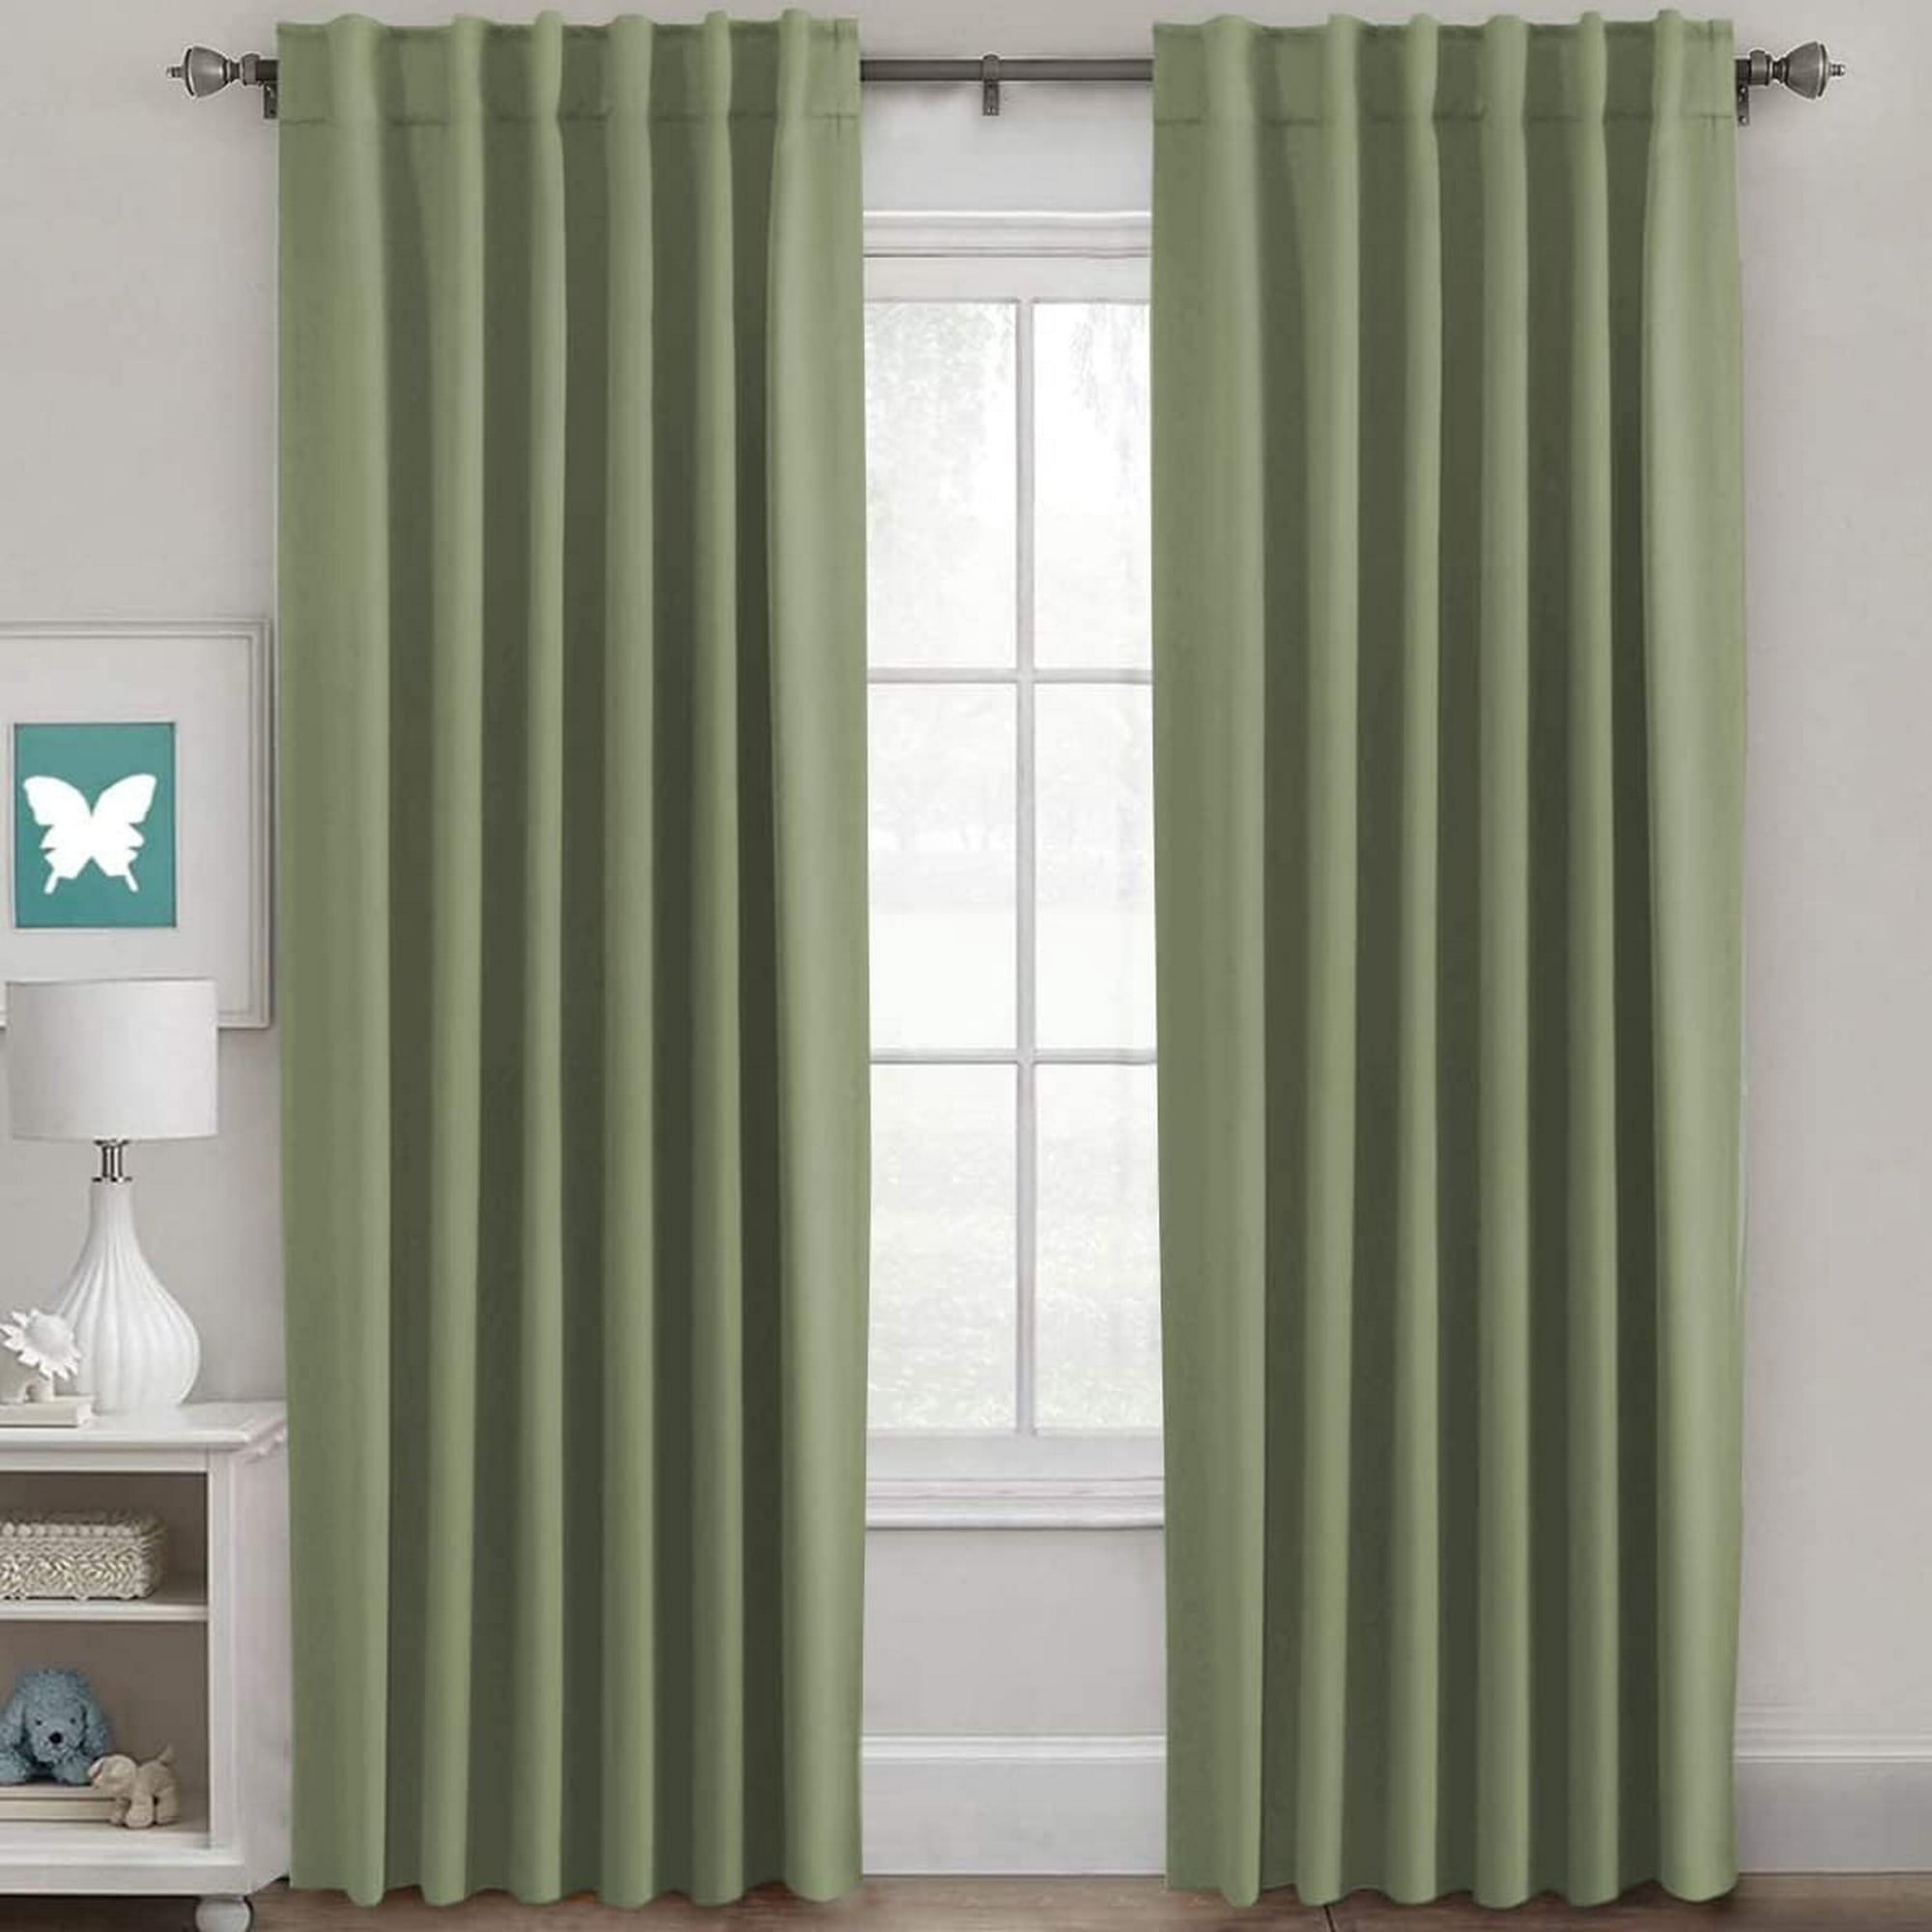 Tres capas de cortina lateral color crema, cortinas opacas de